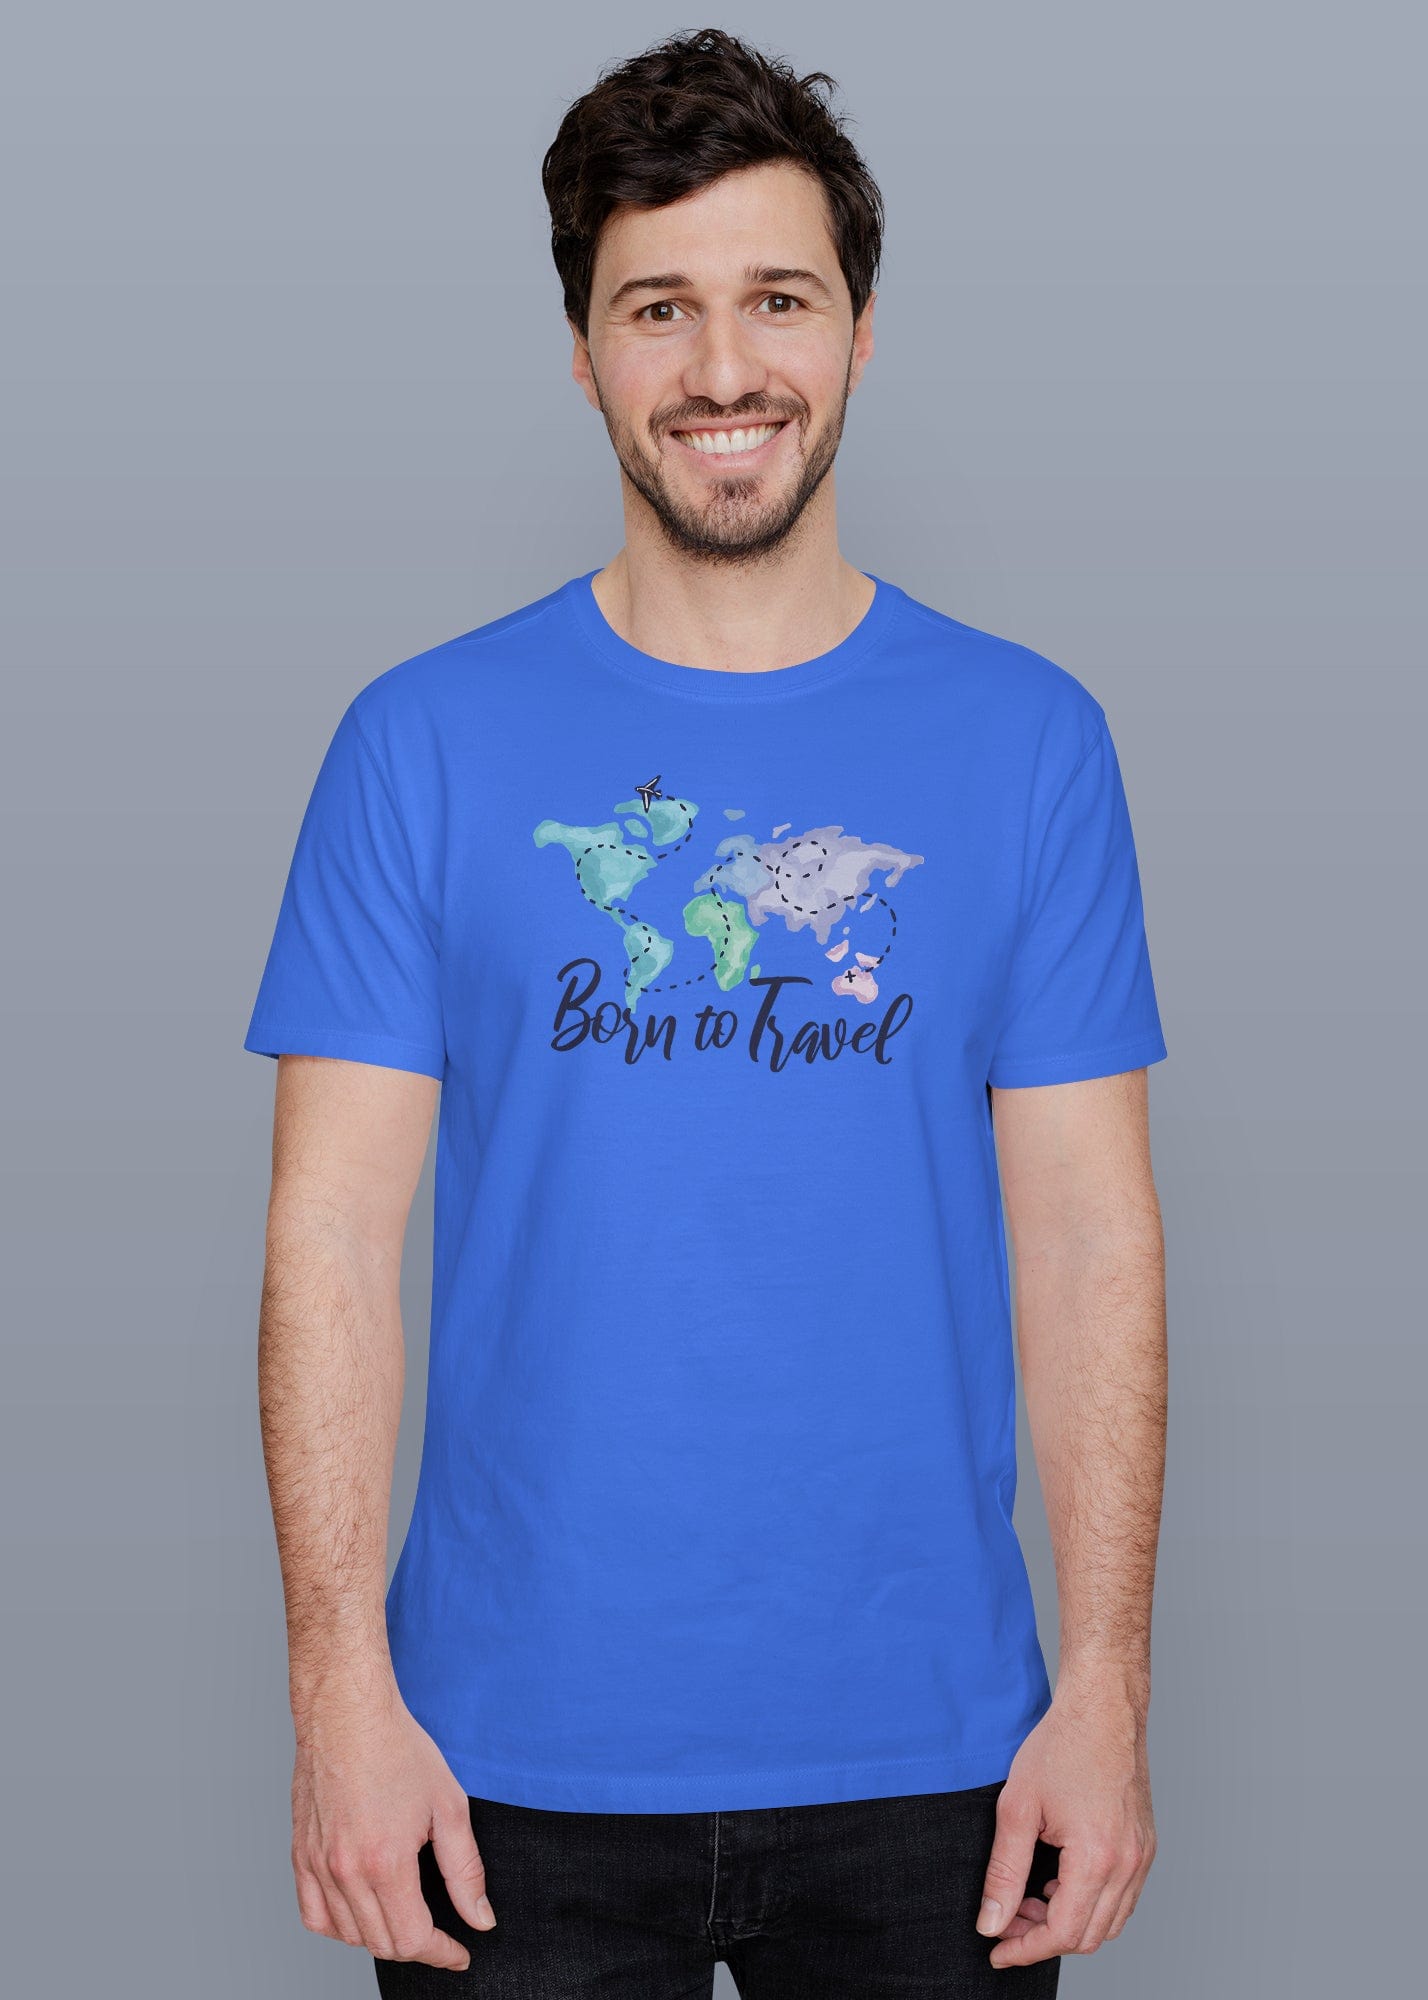 Born To Travel Printed Half Sleeve Premium Cotton T-shirt For Men